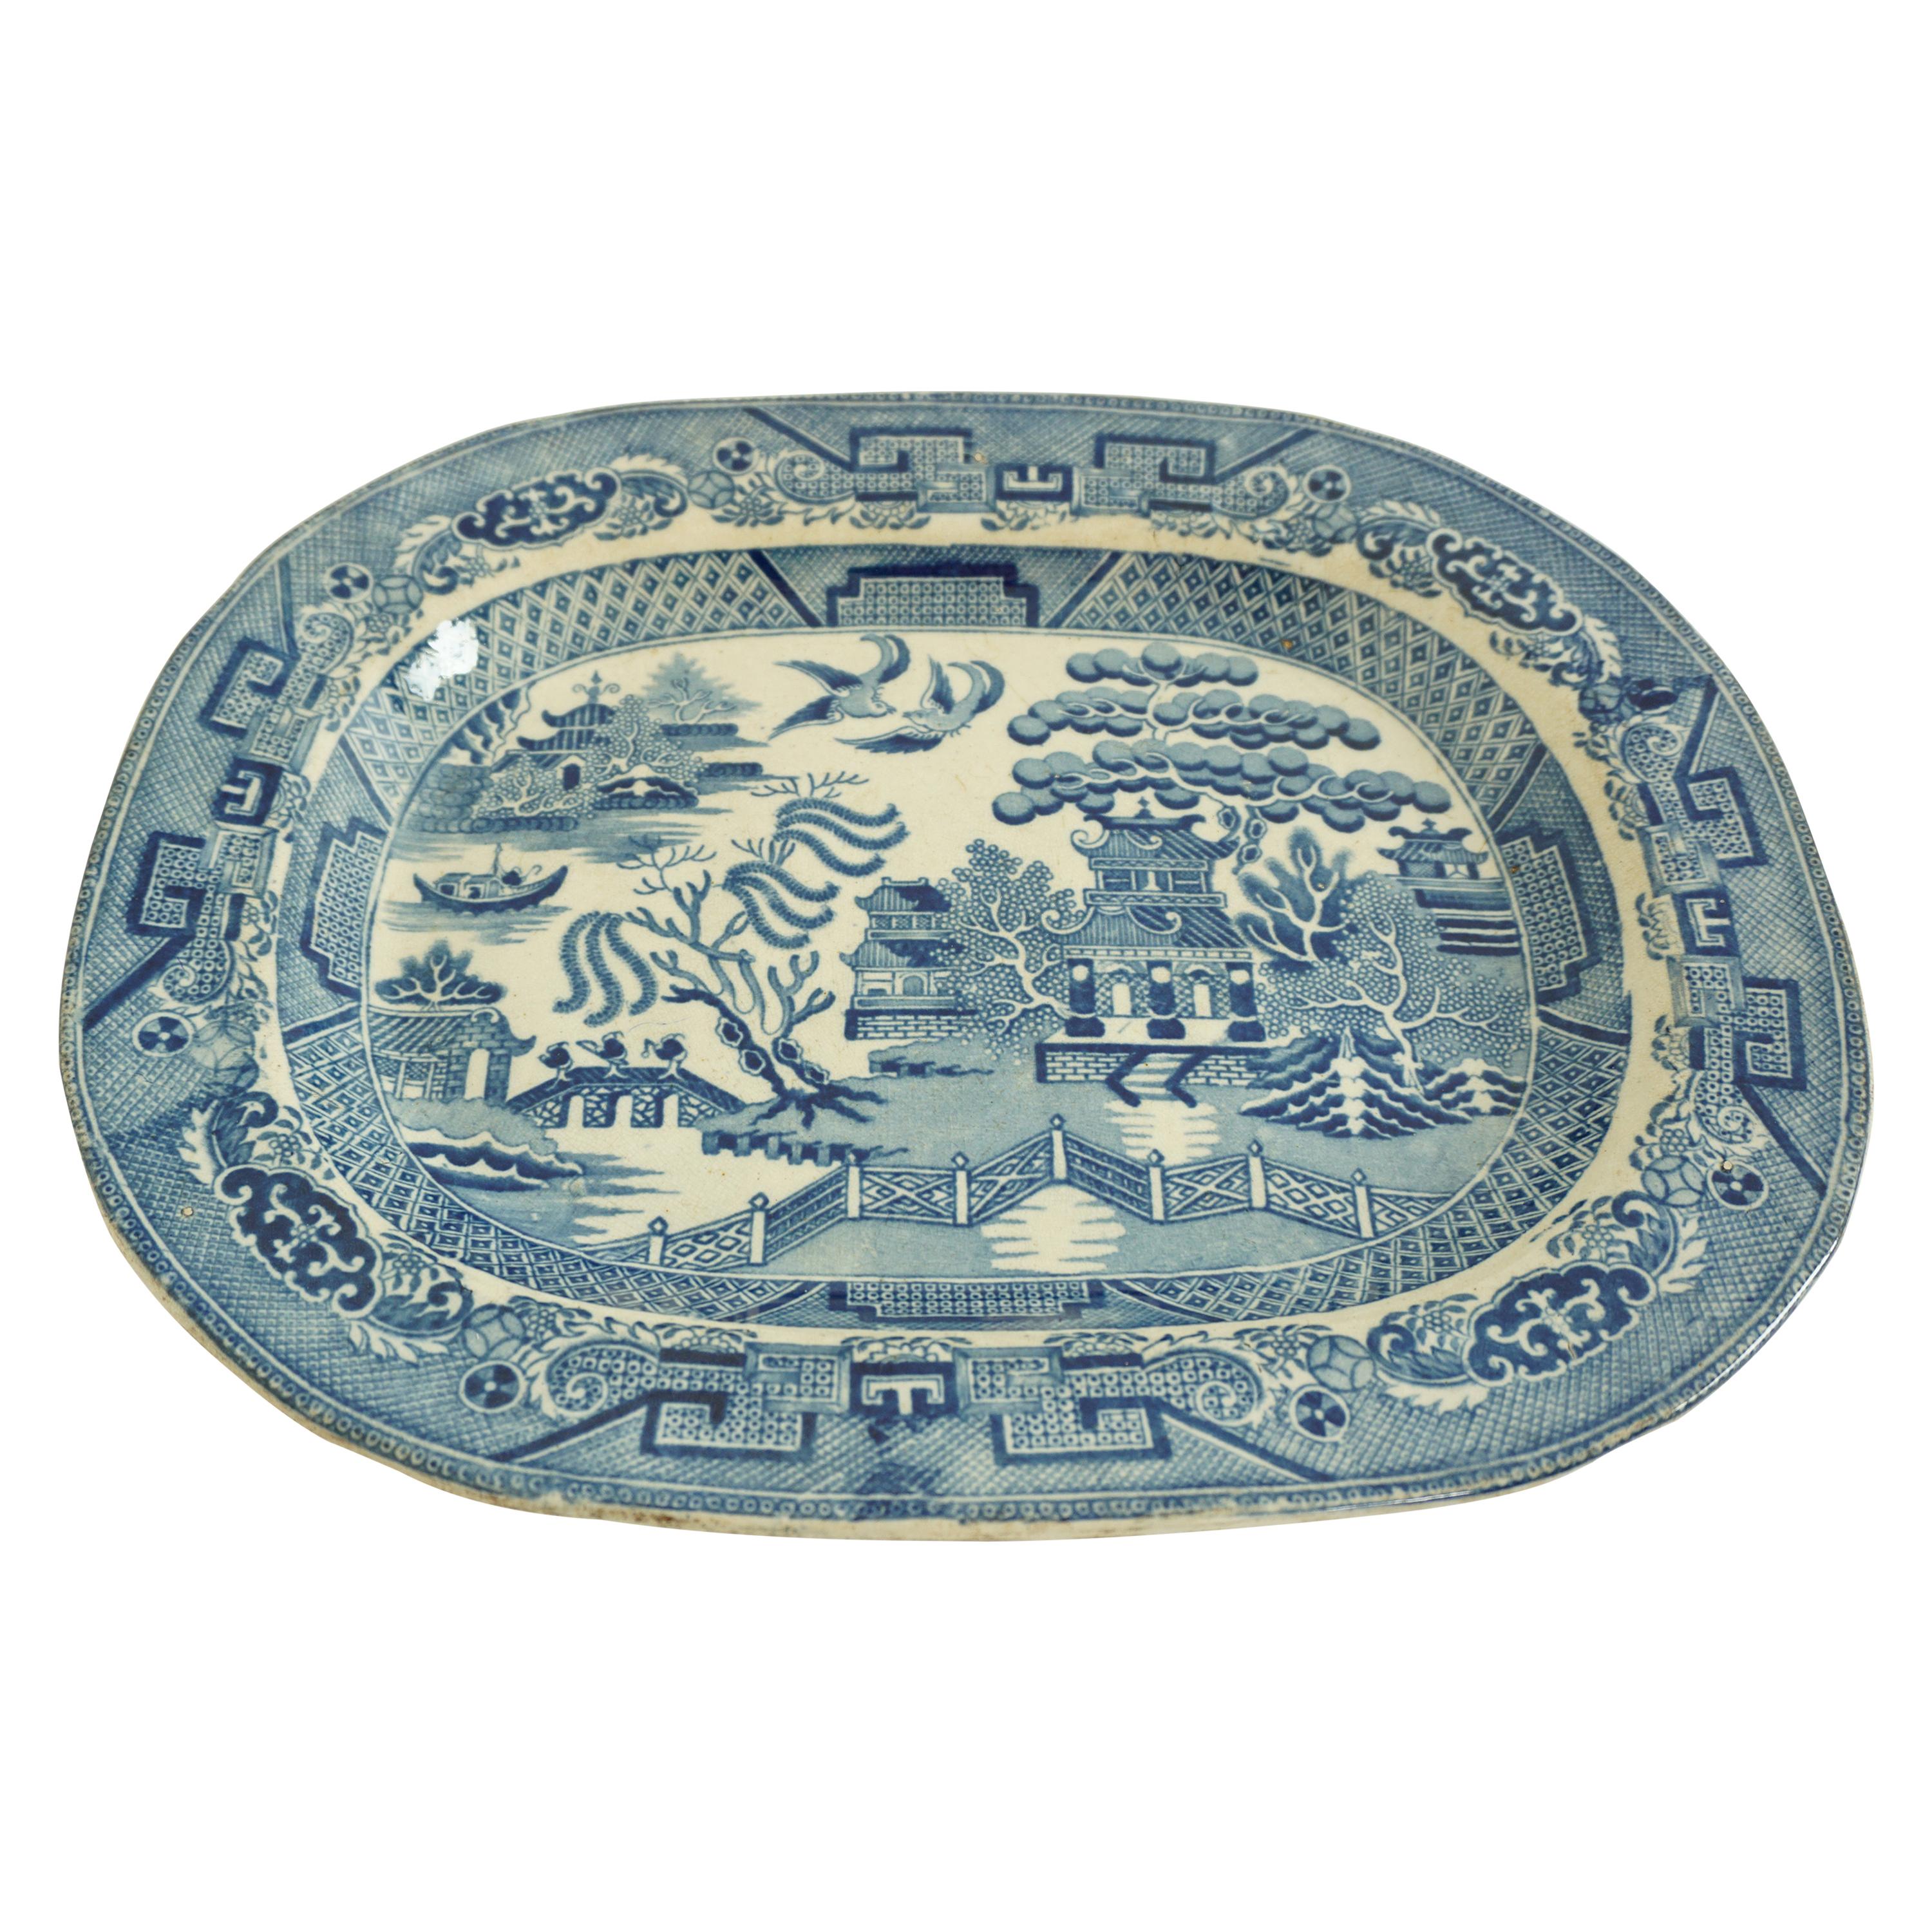 Antique Blue Willow Platter Transfer ware Pottery, England, Circa 1840, 1964